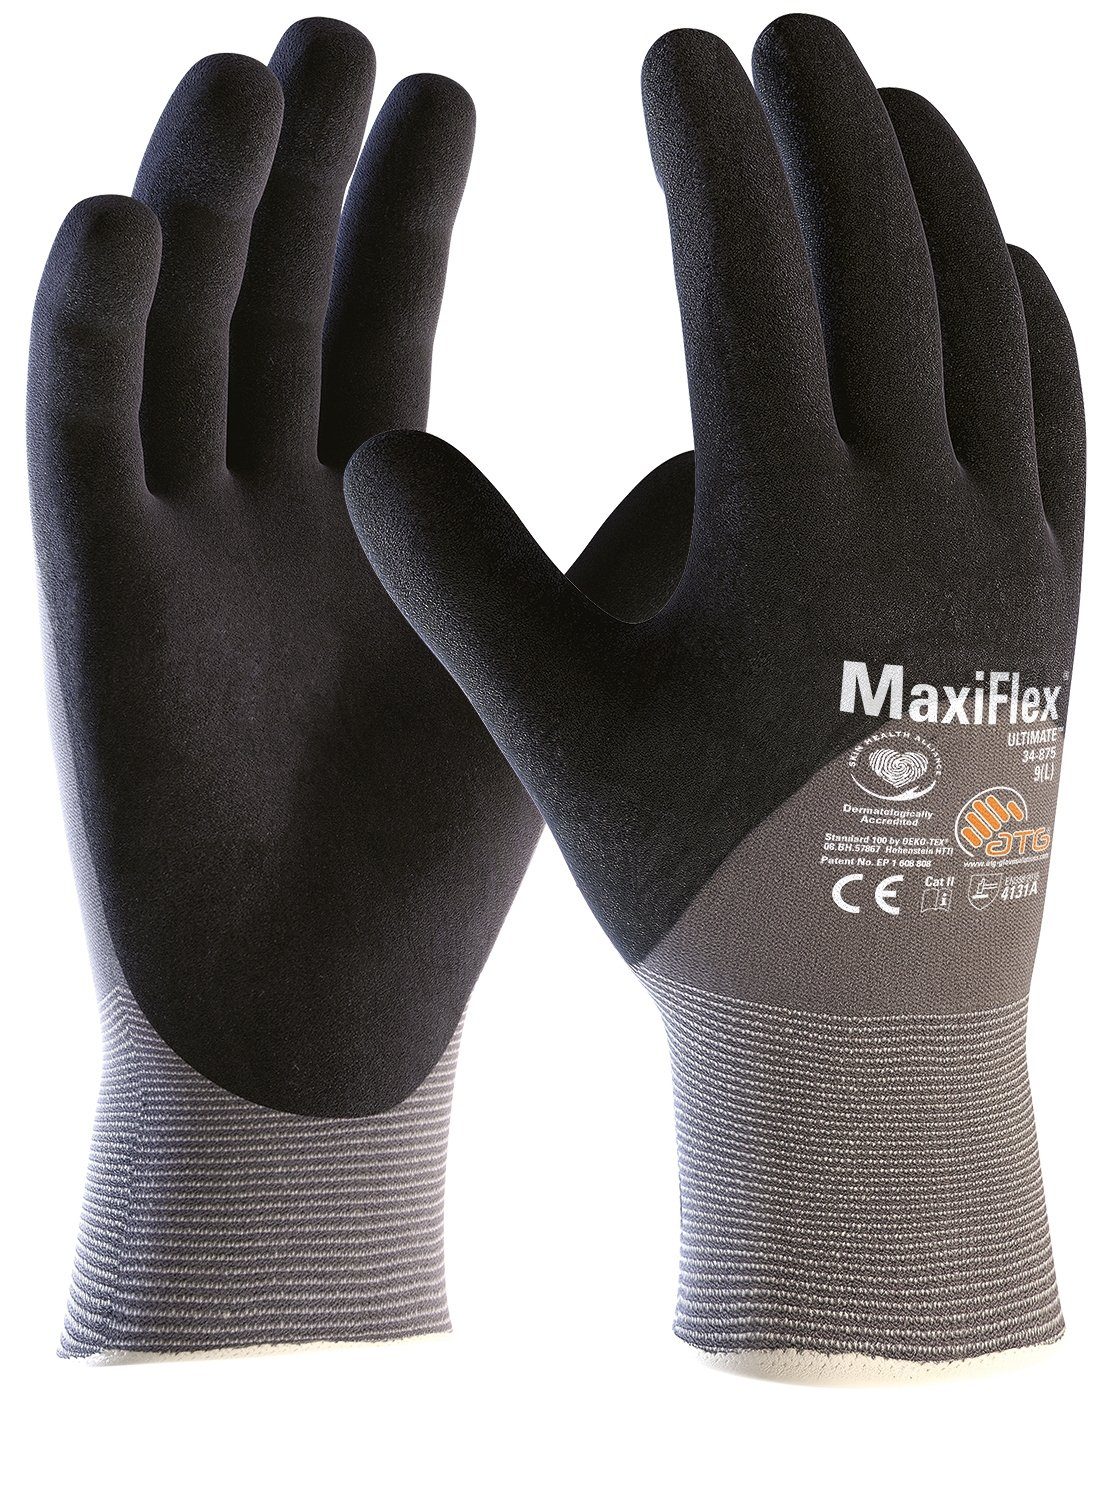 12 3/4 ATG "MaxiFlex beschichtet Montage-Handschuhe Paar Ultimate"